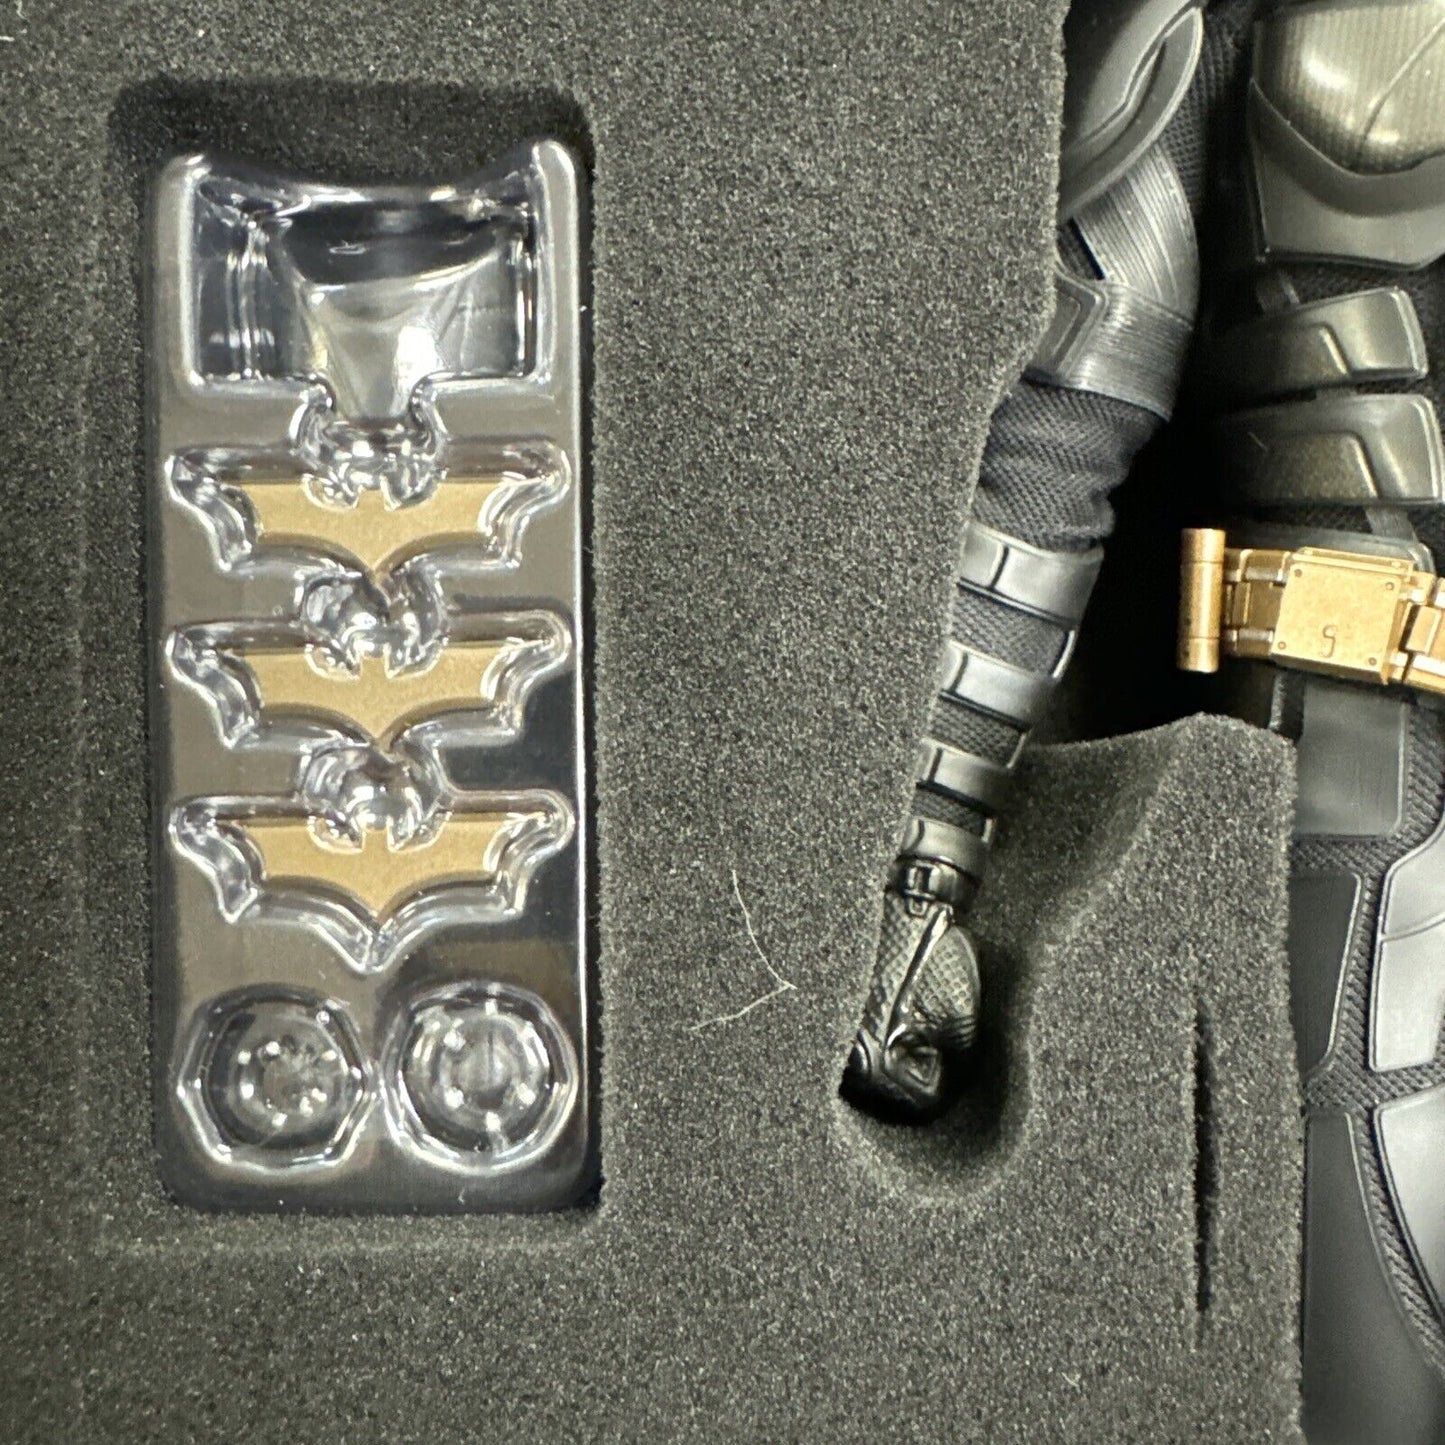 Hot Toys Batman DX19 The Dark Knight Rises Action Figure